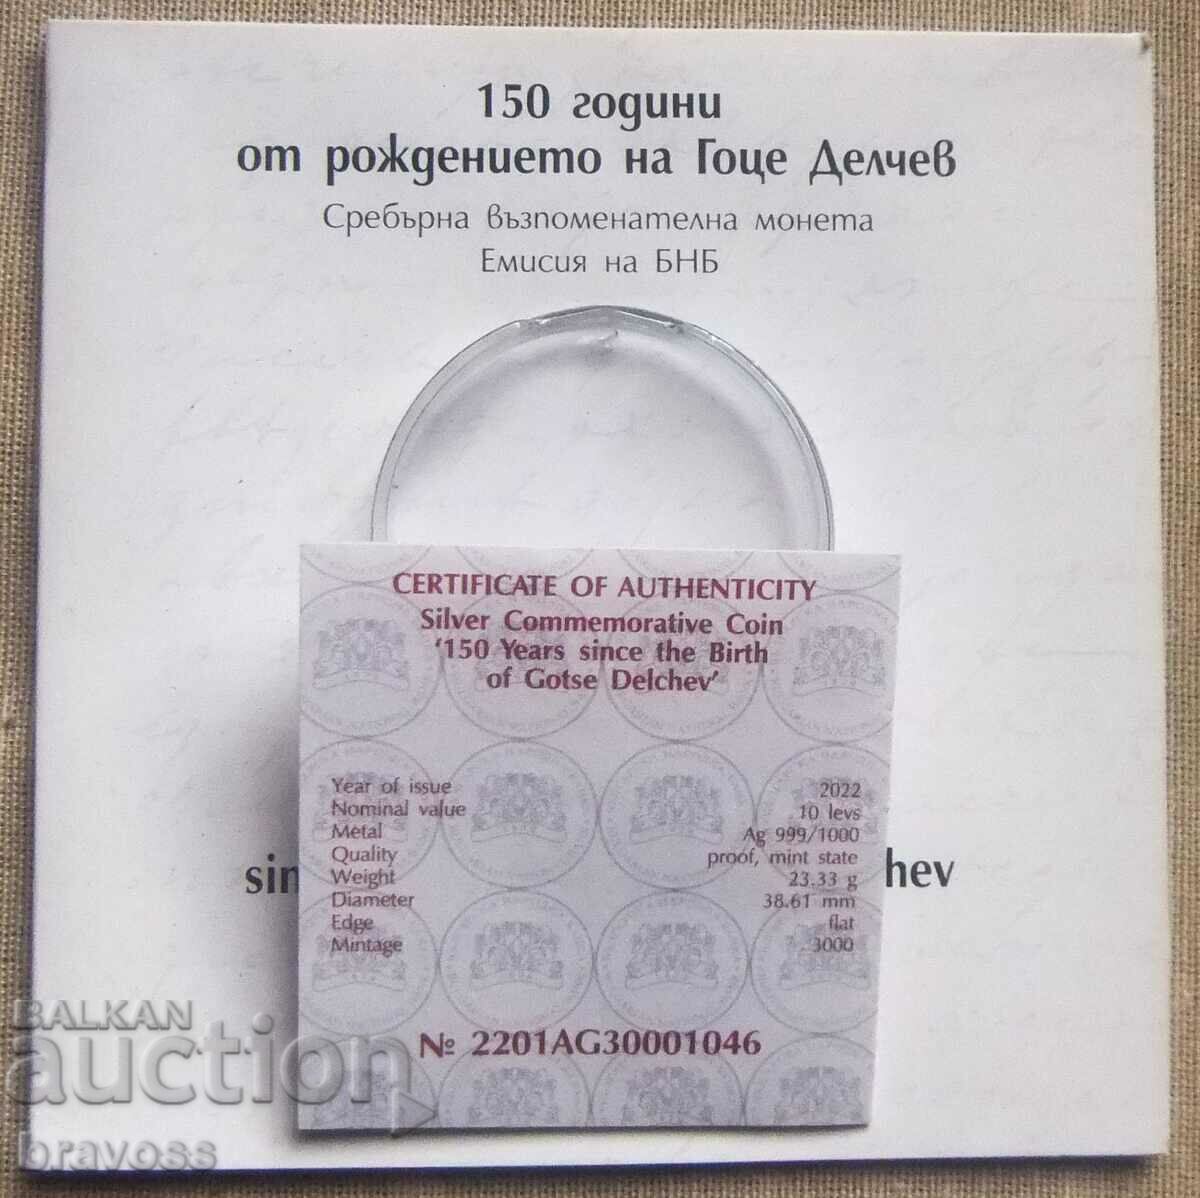 Certificate for BGN 10 - Gotse Delchev